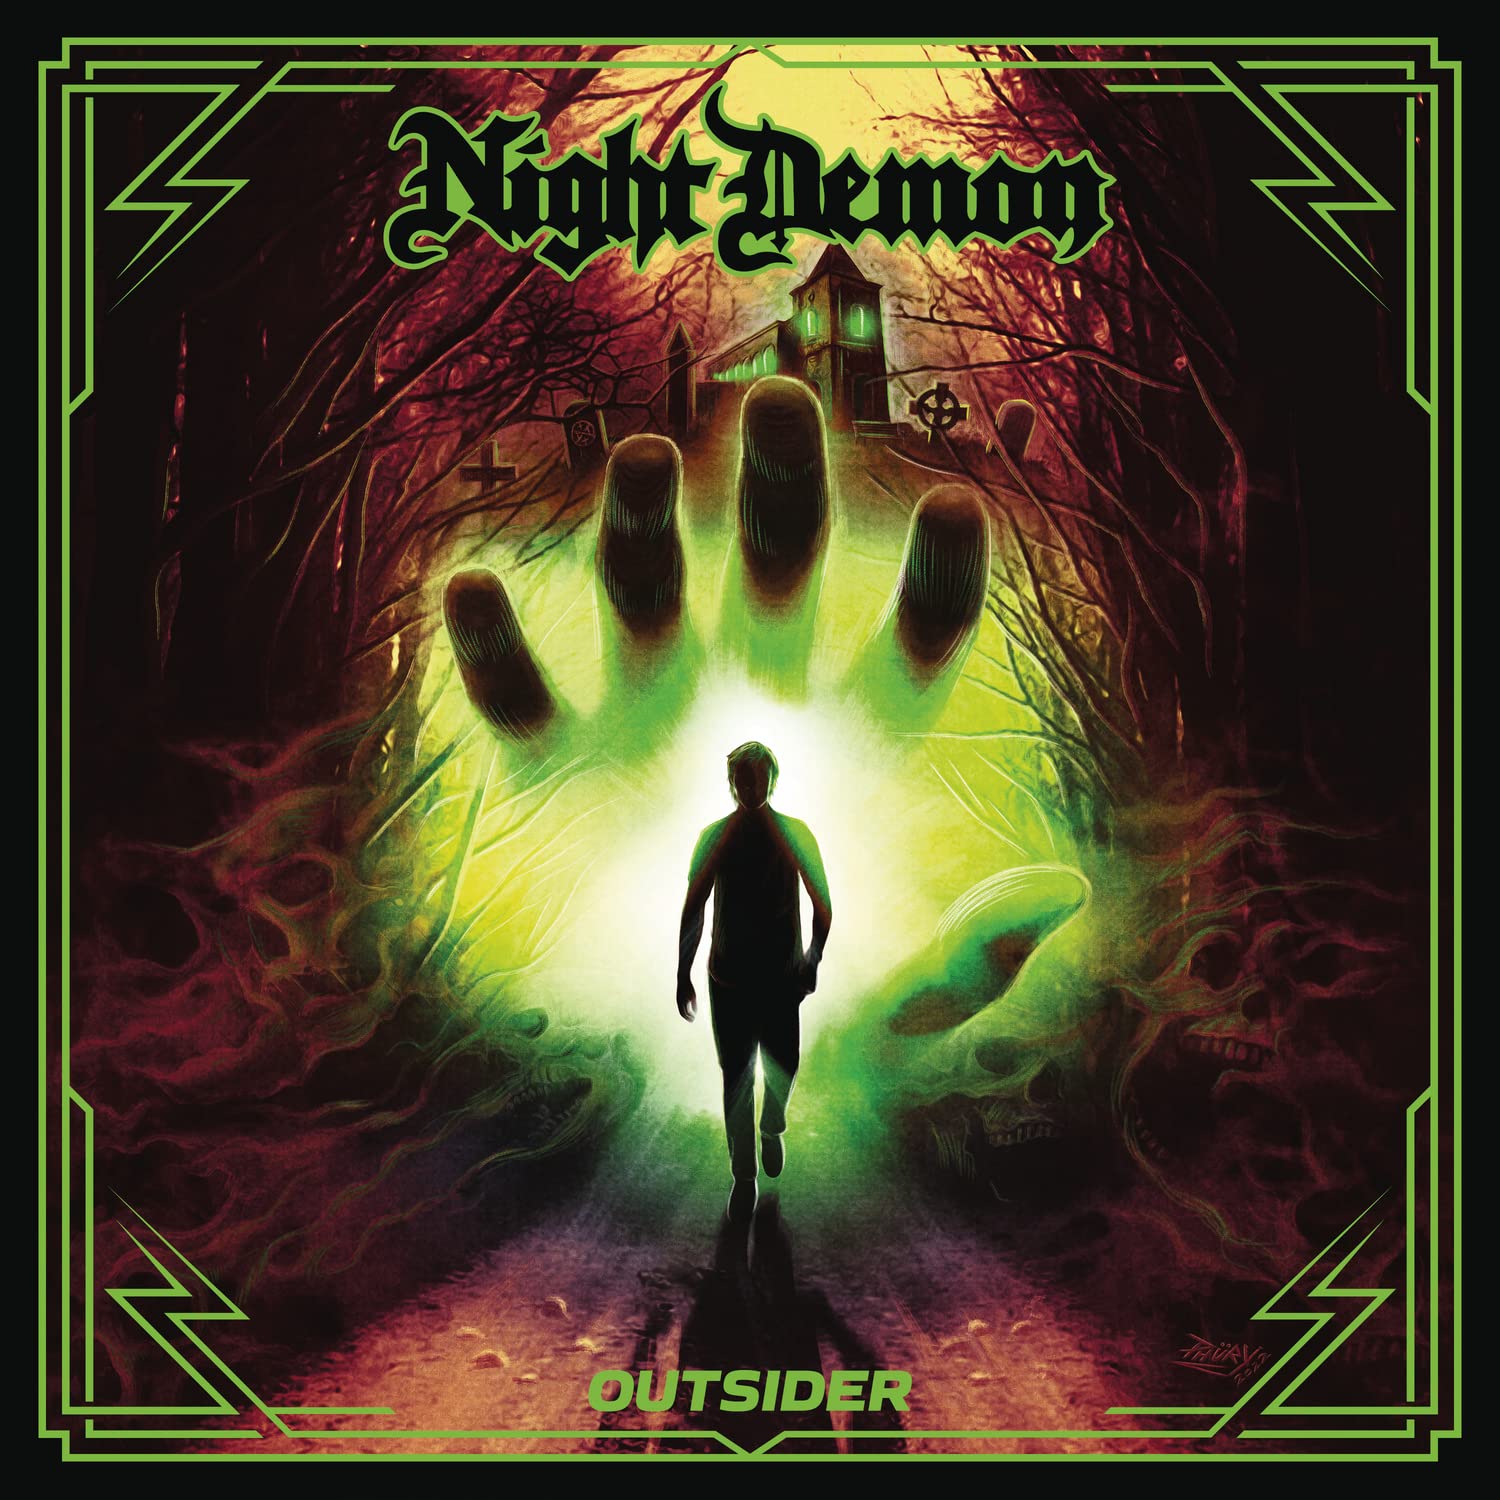 Night Demon Outsider Vinyl LP